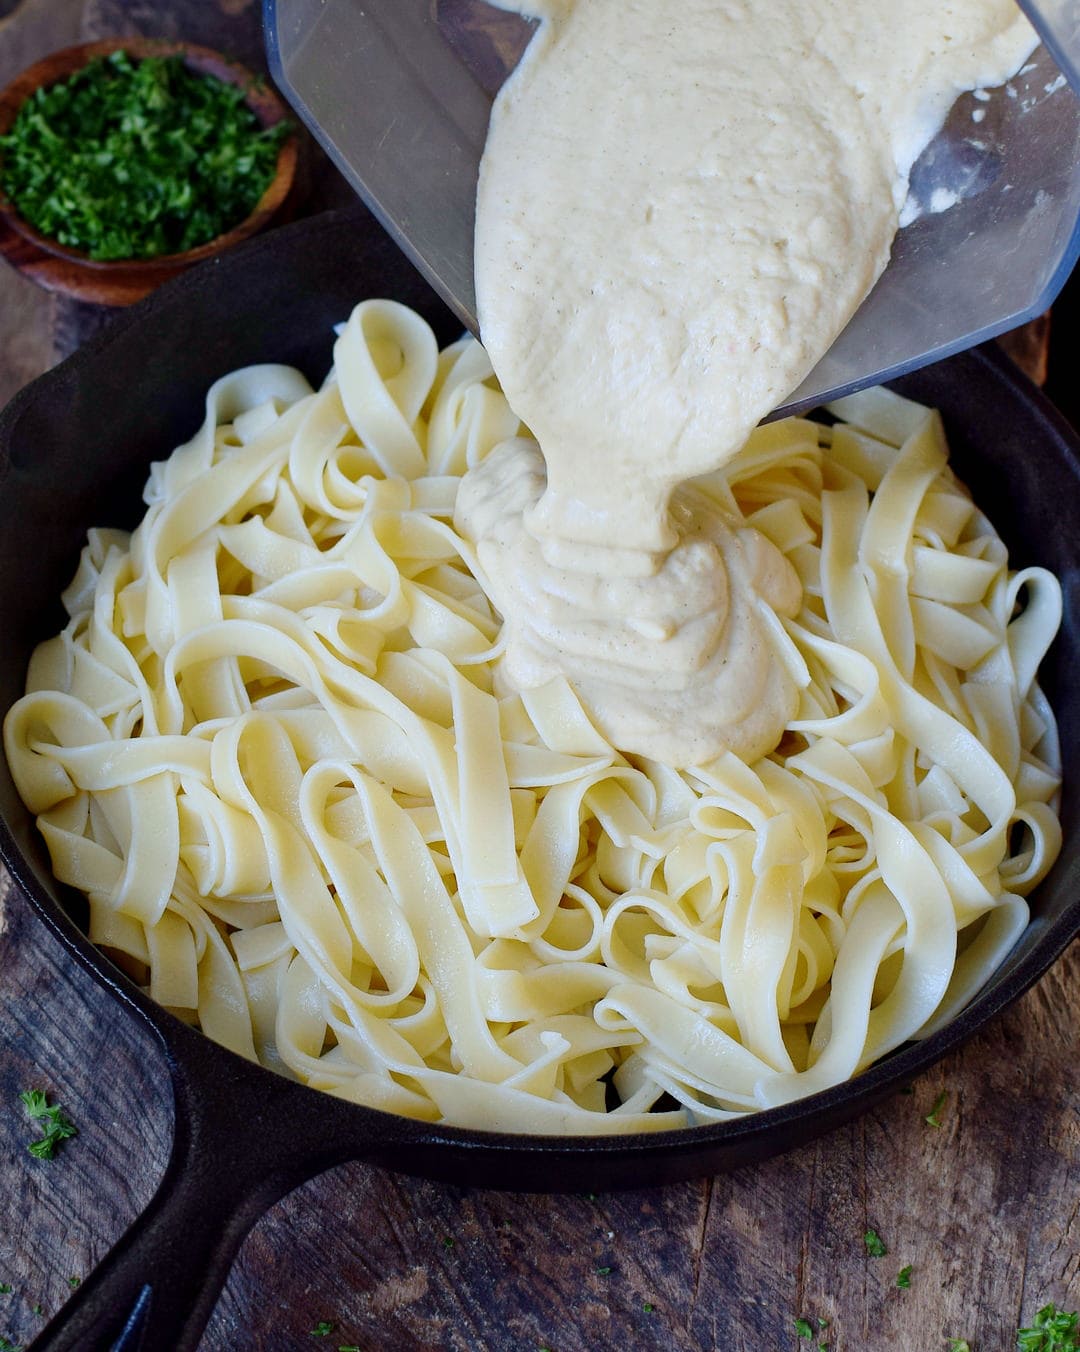 Pouring cauliflower sauce over Fettuccine pasta